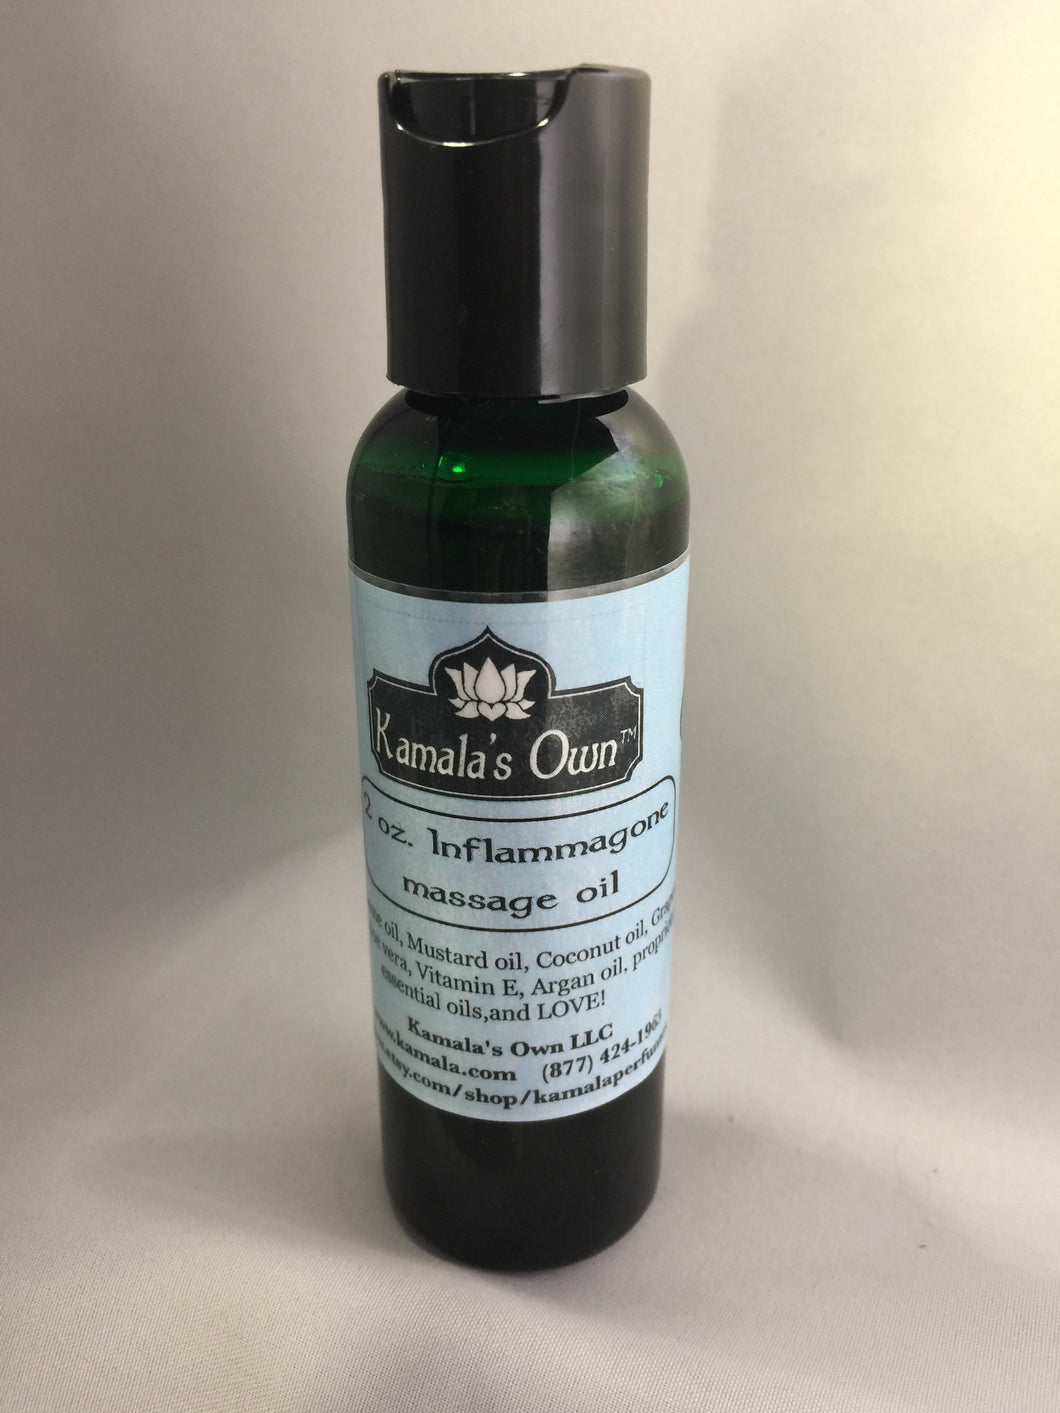 Inflammagone massage oil, 2 oz. bottle